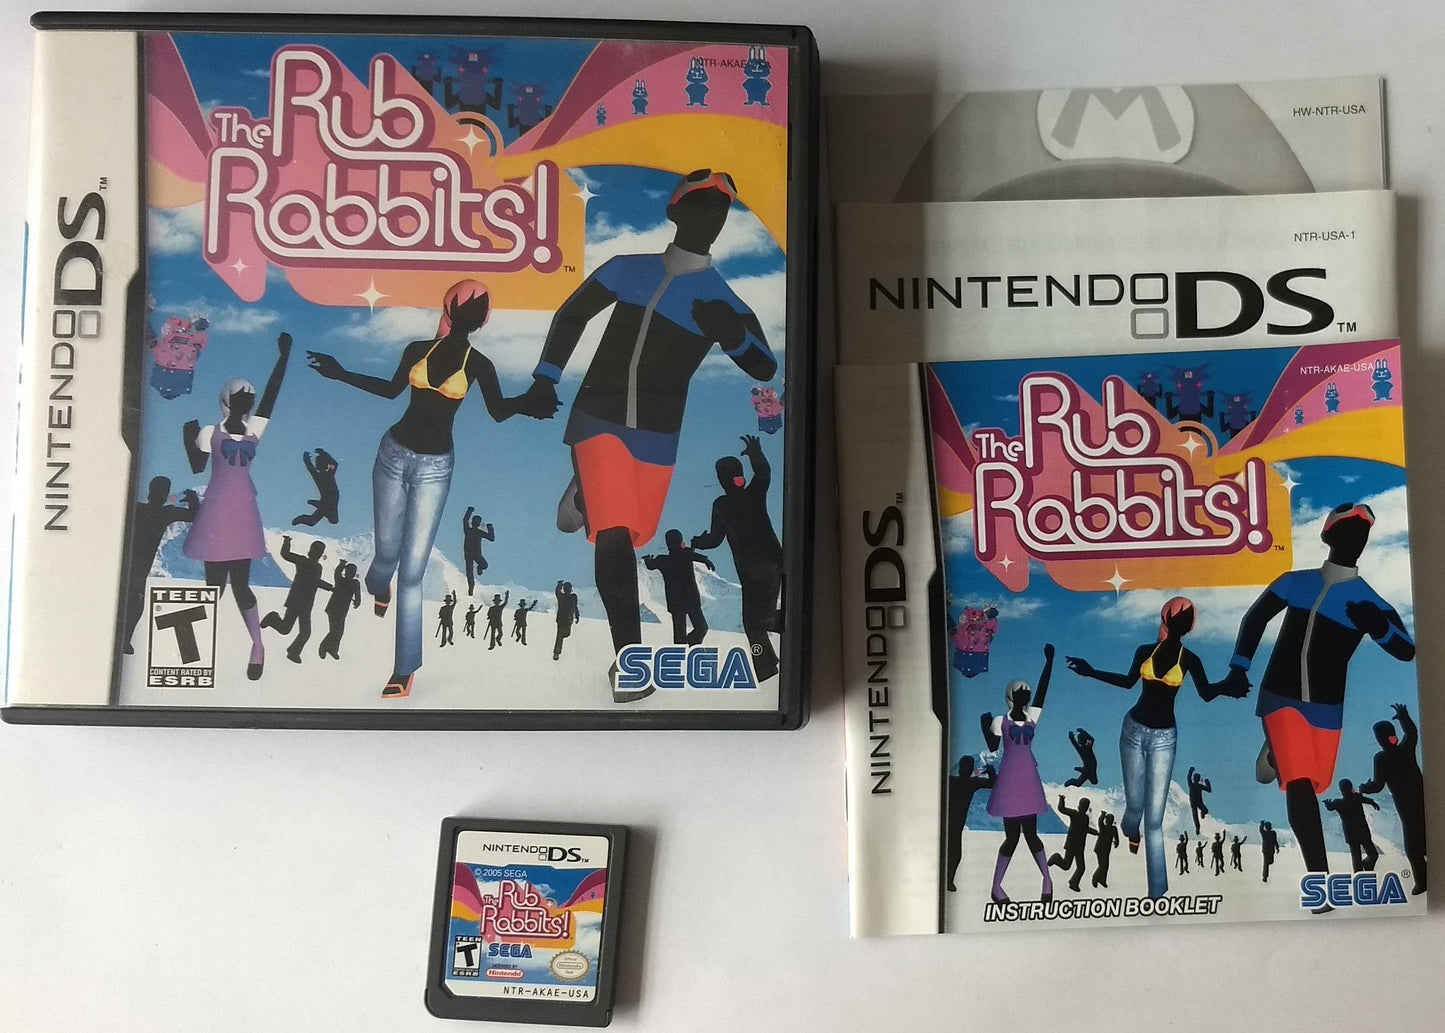 RUB RABBITS (NINTENDO DS) - jeux video game-x